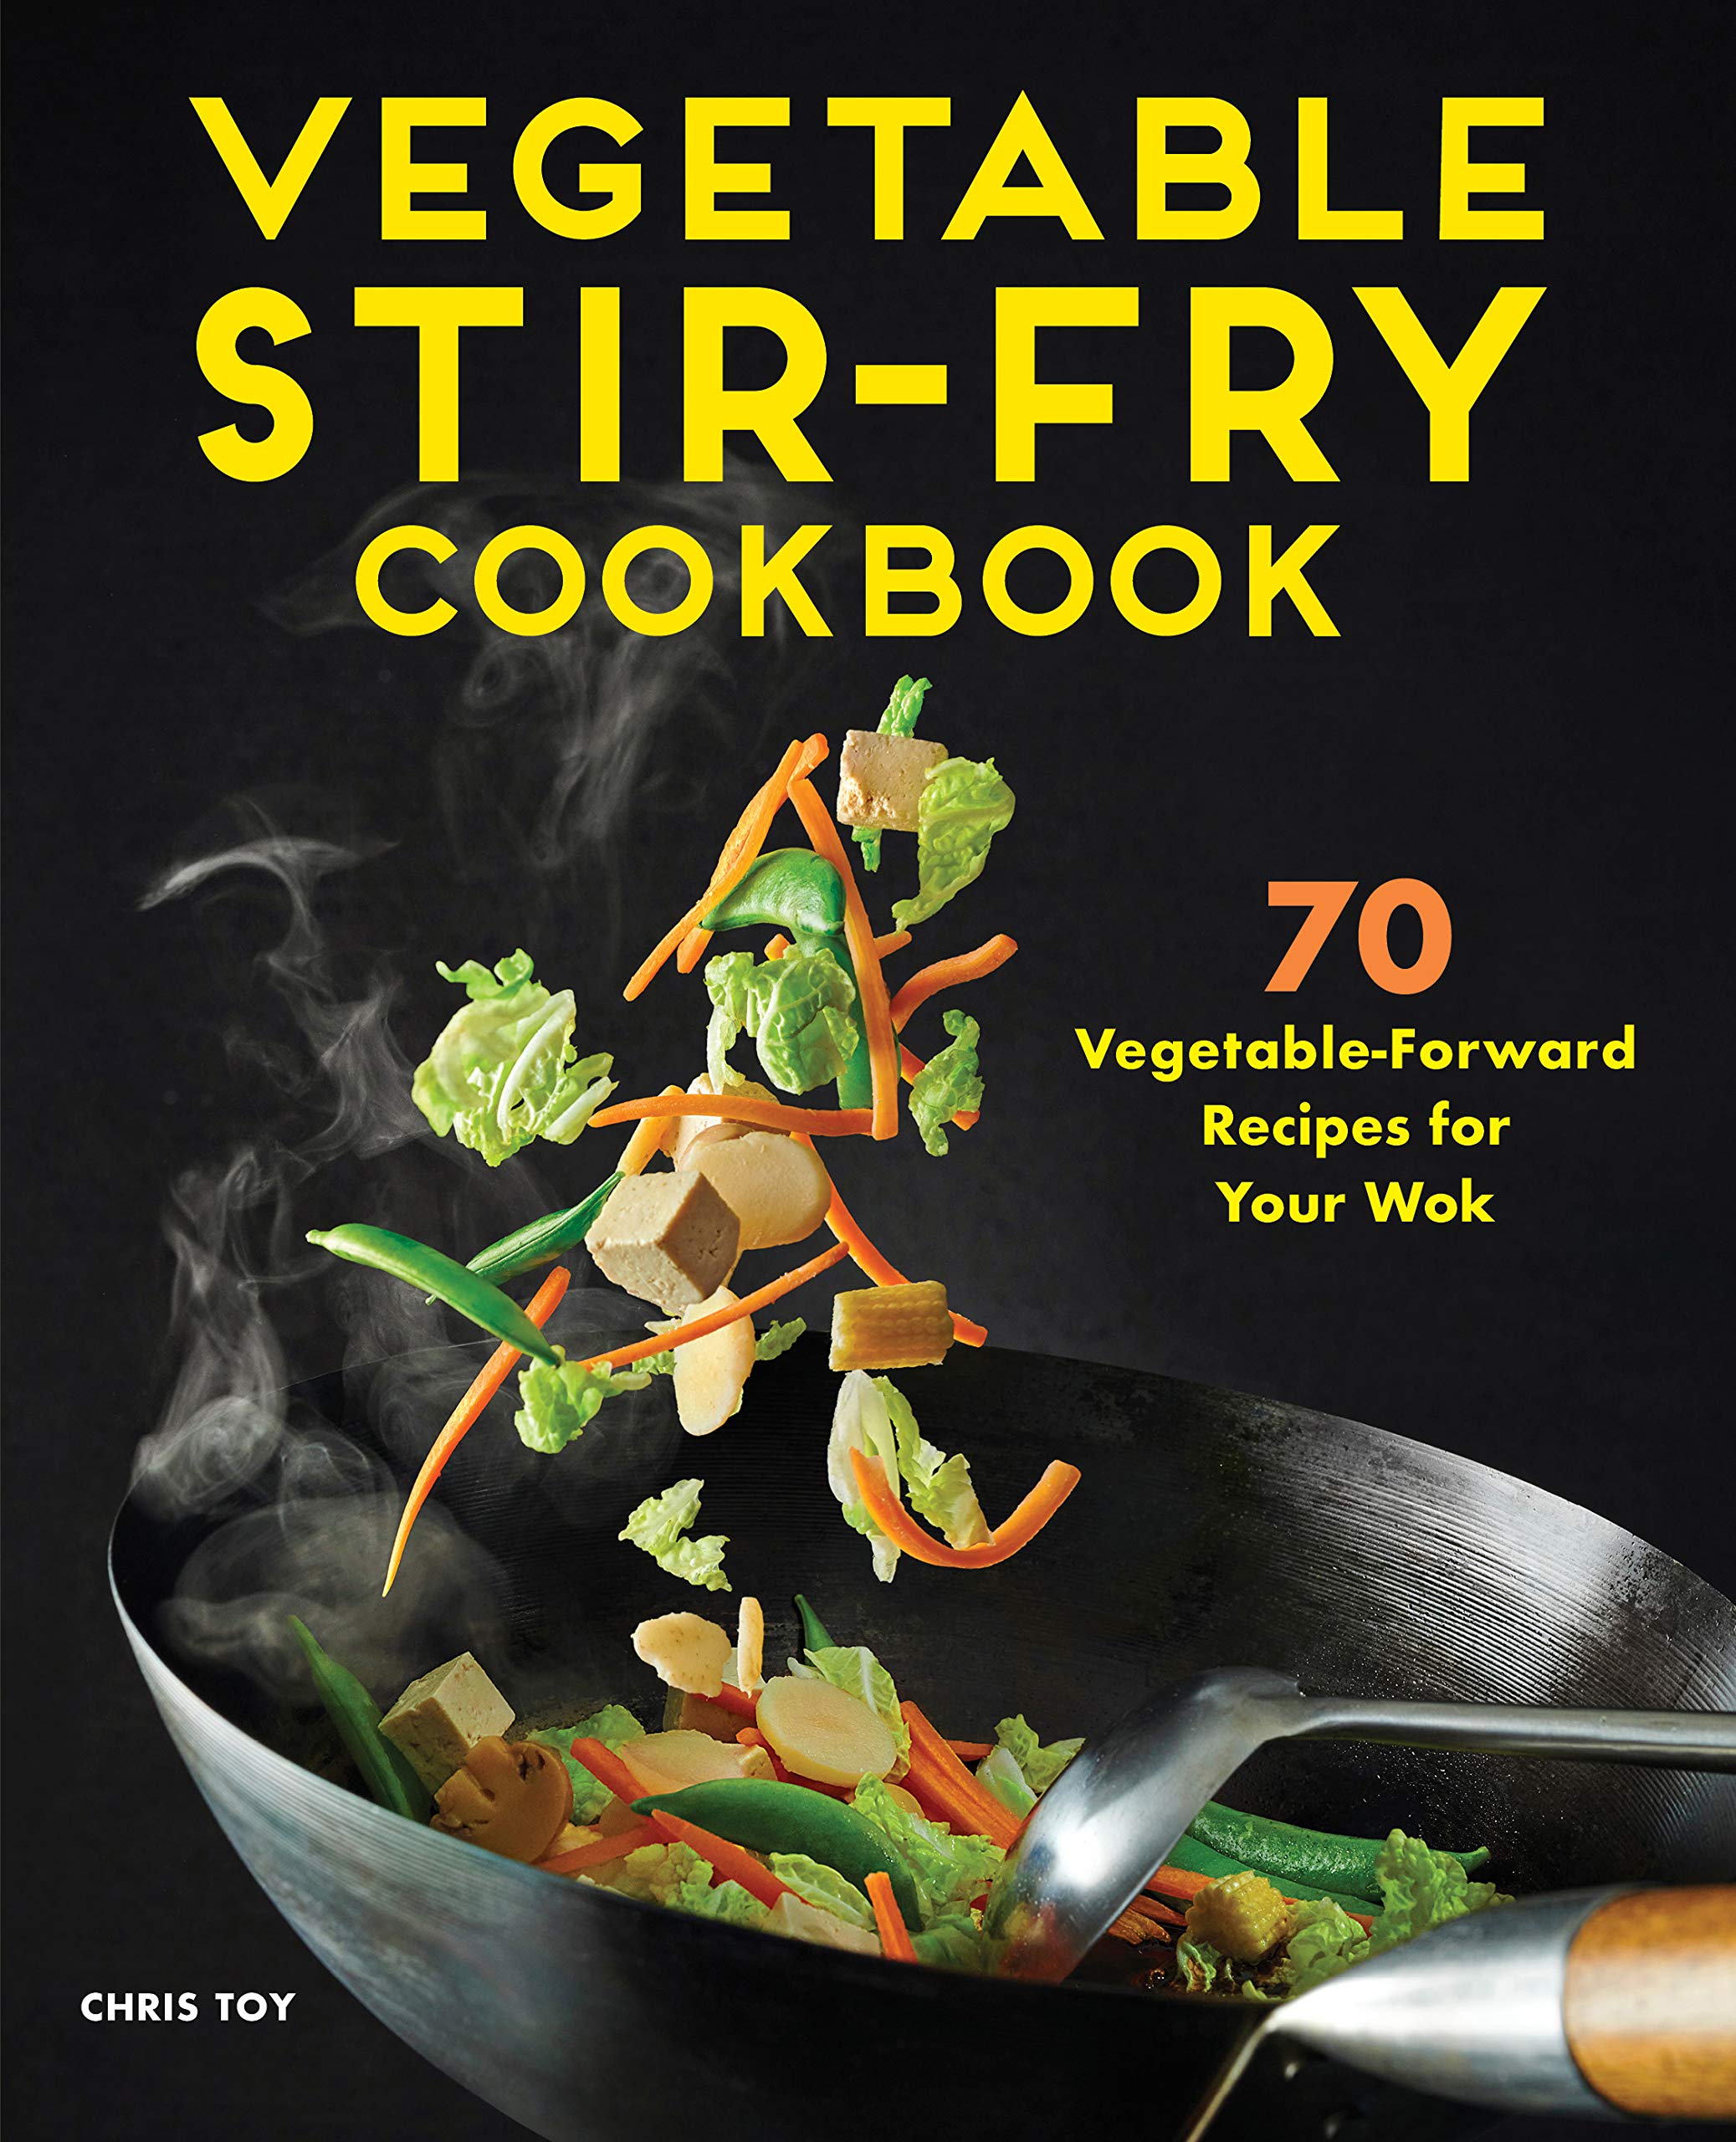 Vegetable Stir-Fry Cookbook: 70 Vegetable-Forward Recipes for Your Wok (Chris Toy)